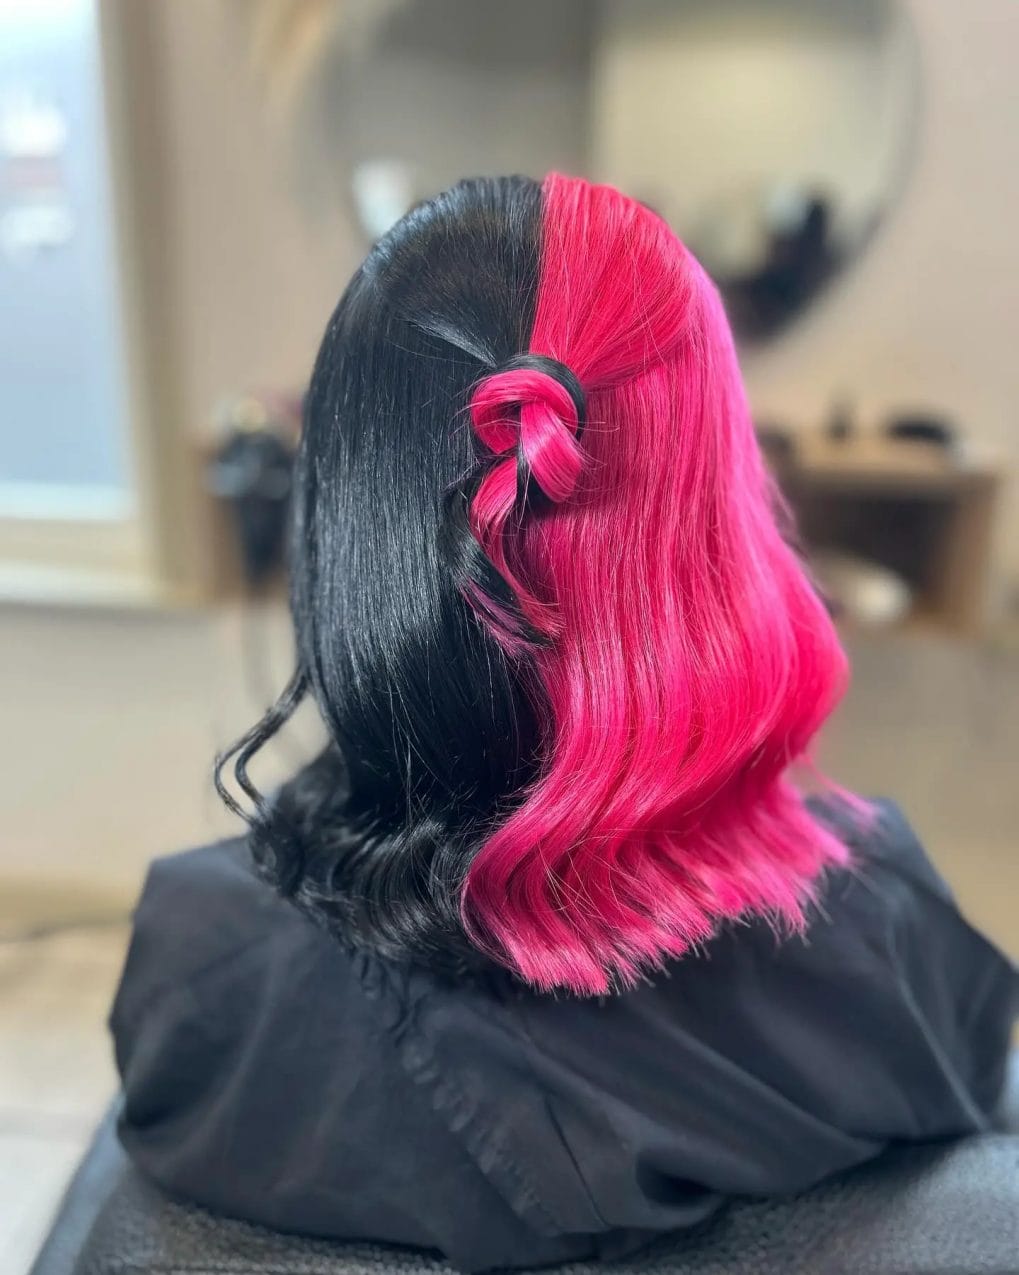 Vibrant pink and sleek black split in playful twist style